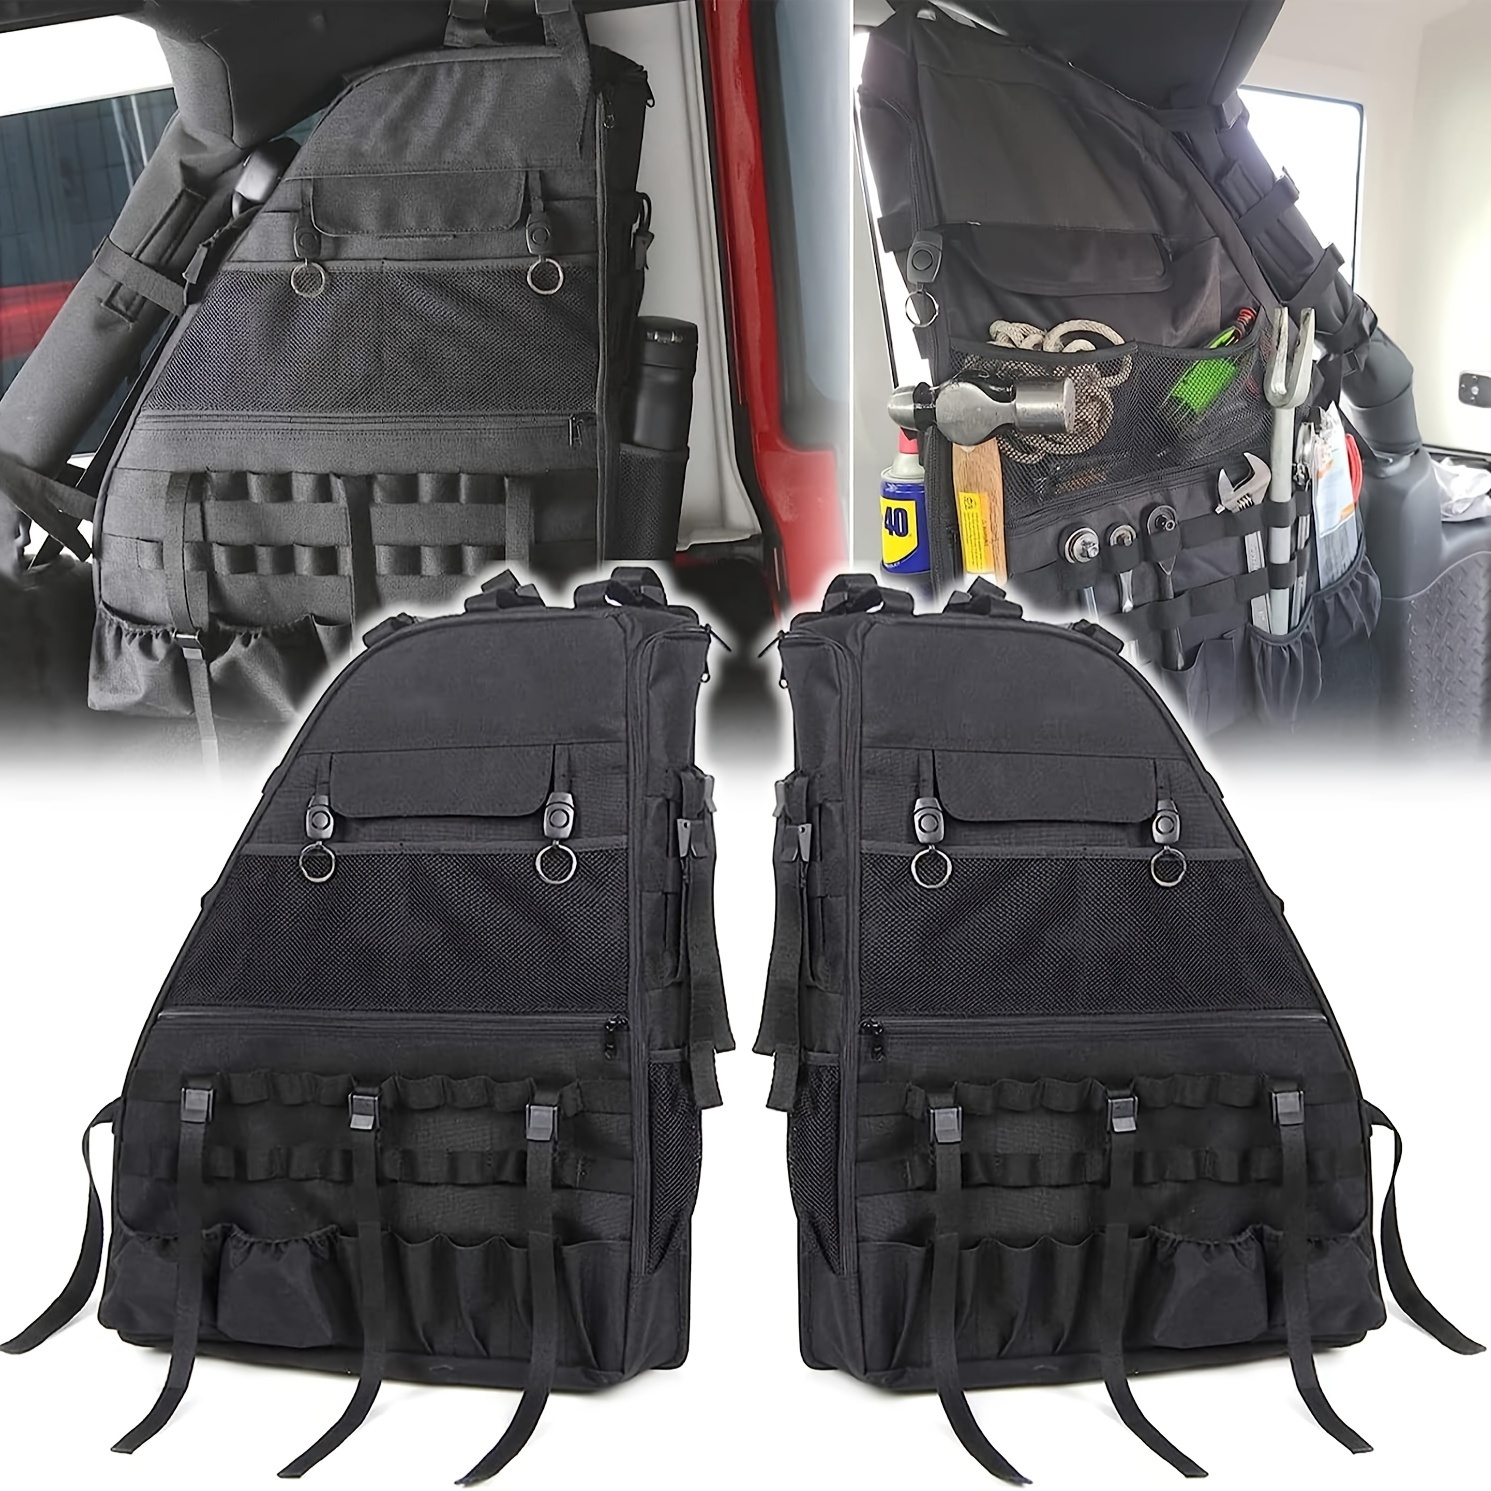 

1pc/2pcs Roll Bar Storage Bag For Wrangler Jk Tj Lj 97-23 & Unlimited Jl 4-door With Multi-pockets & Organizers & Cargo Bag Saddlebag Tool Kit